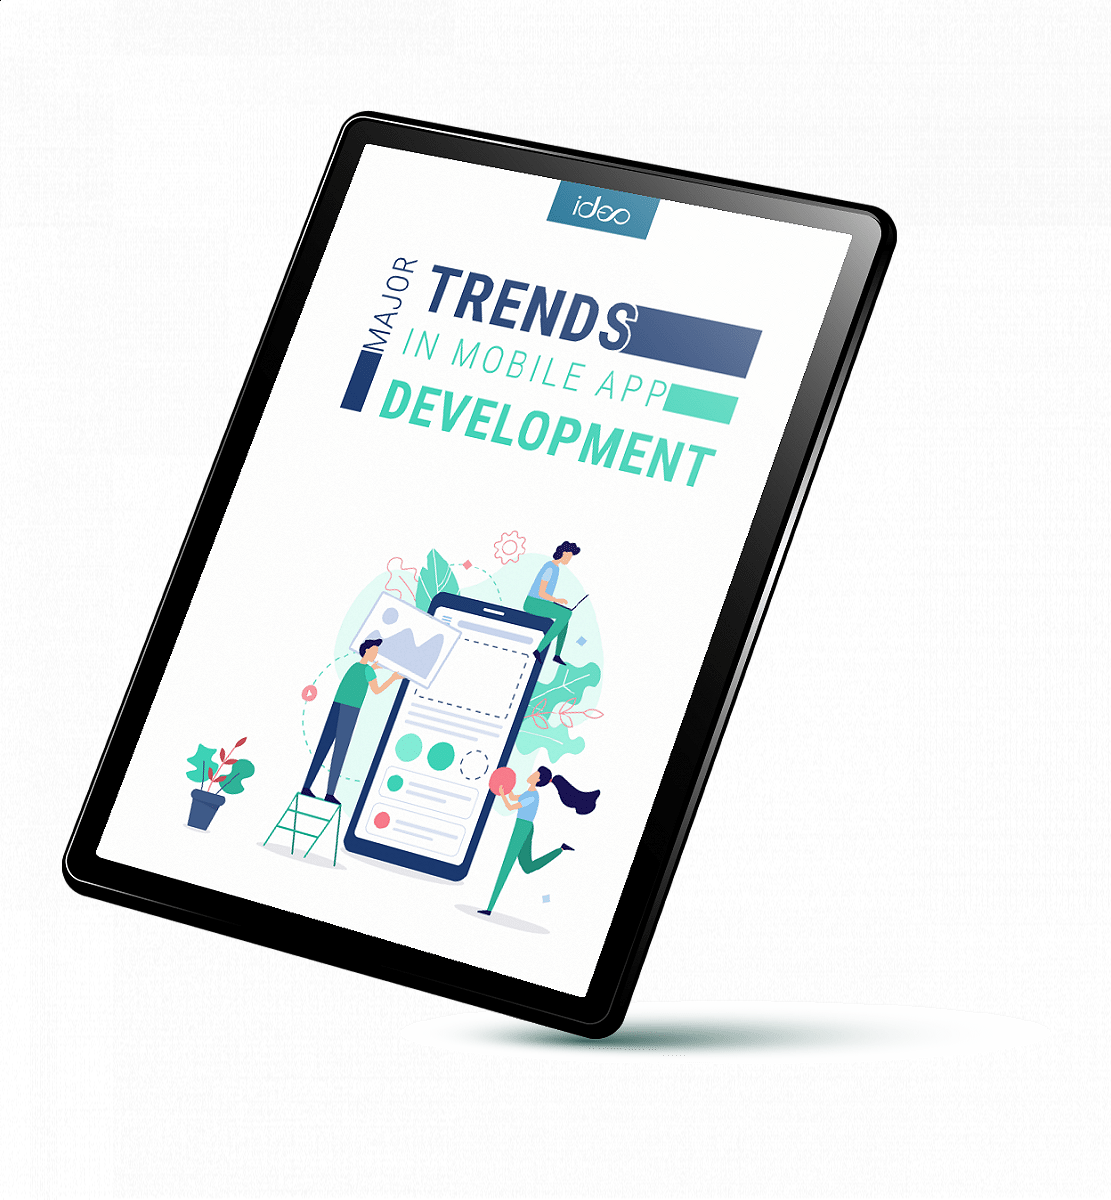 Major Trends in Mobile App Development.png [351.57 KB]